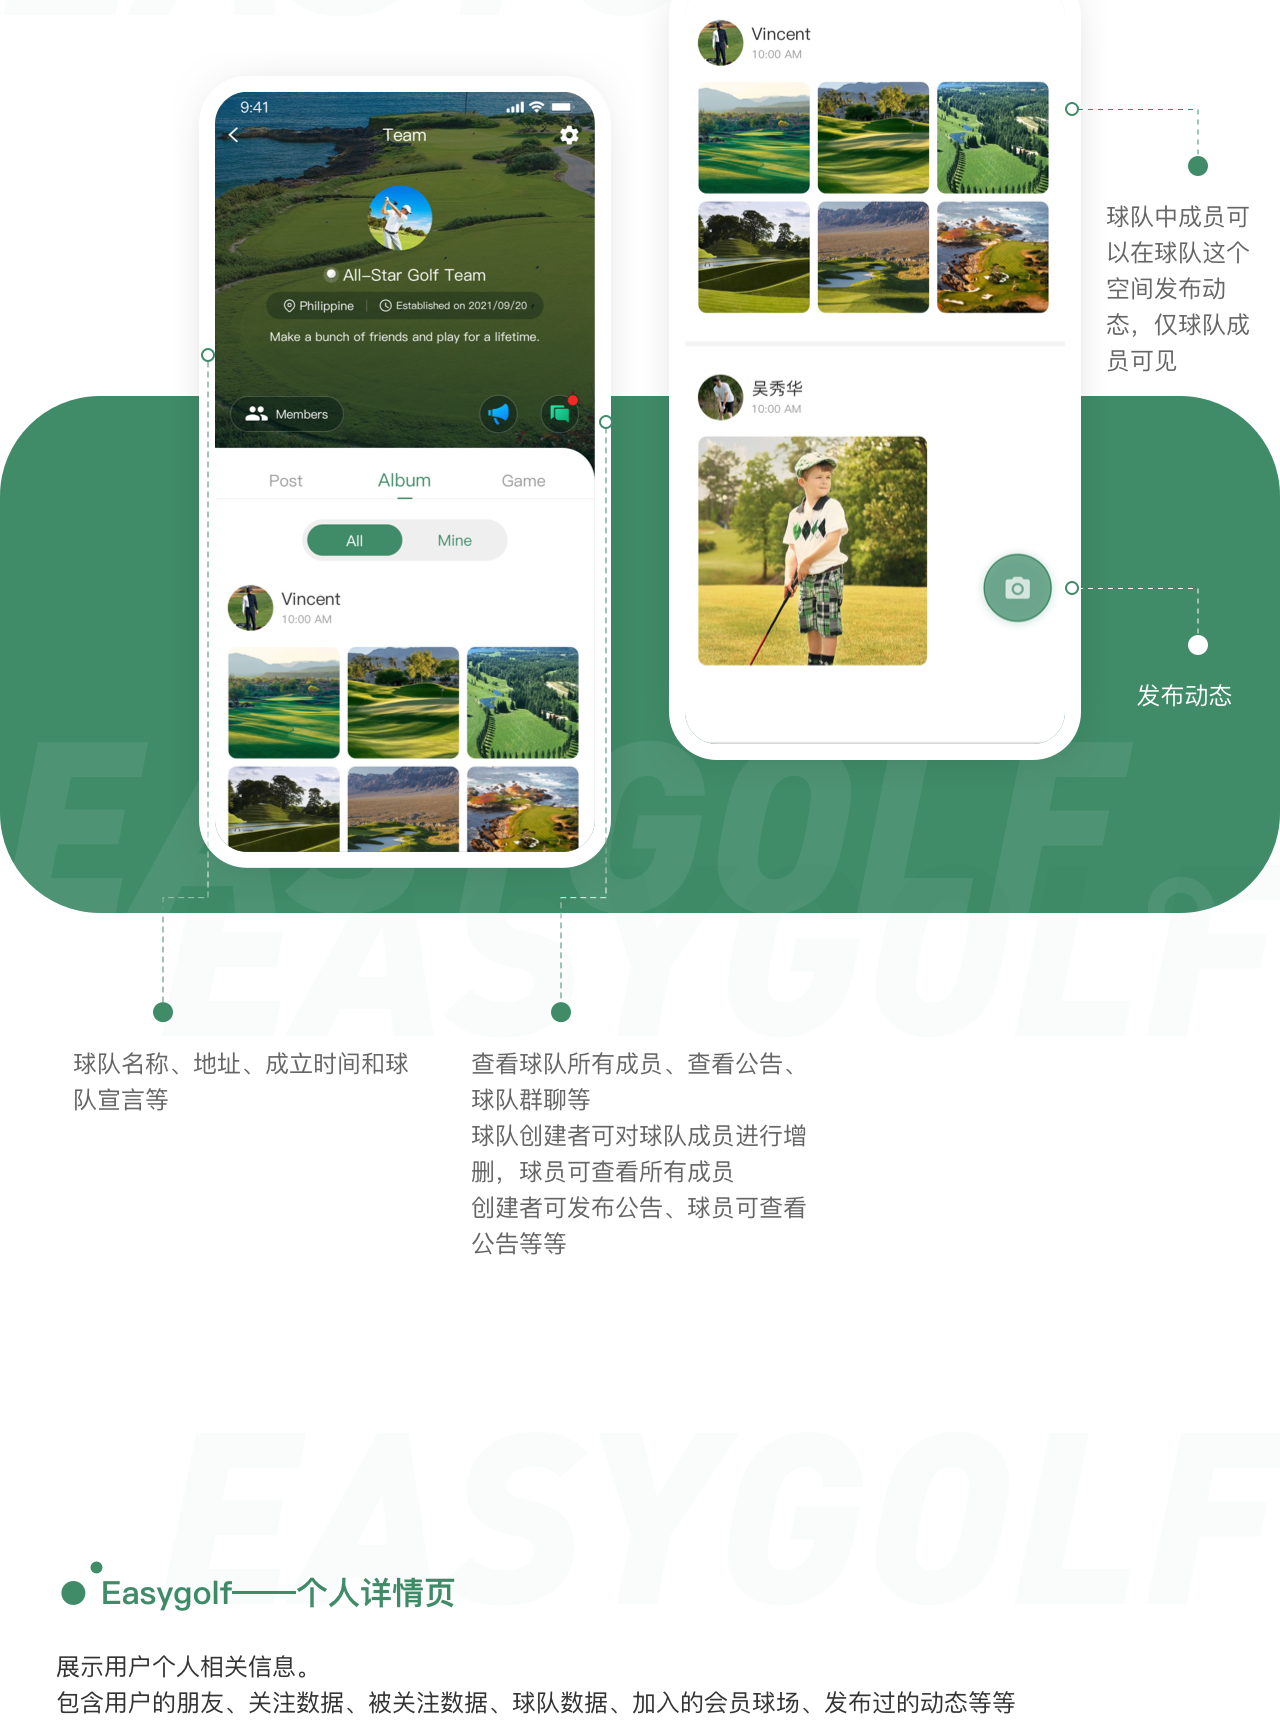 Easygolf Golf Online APP